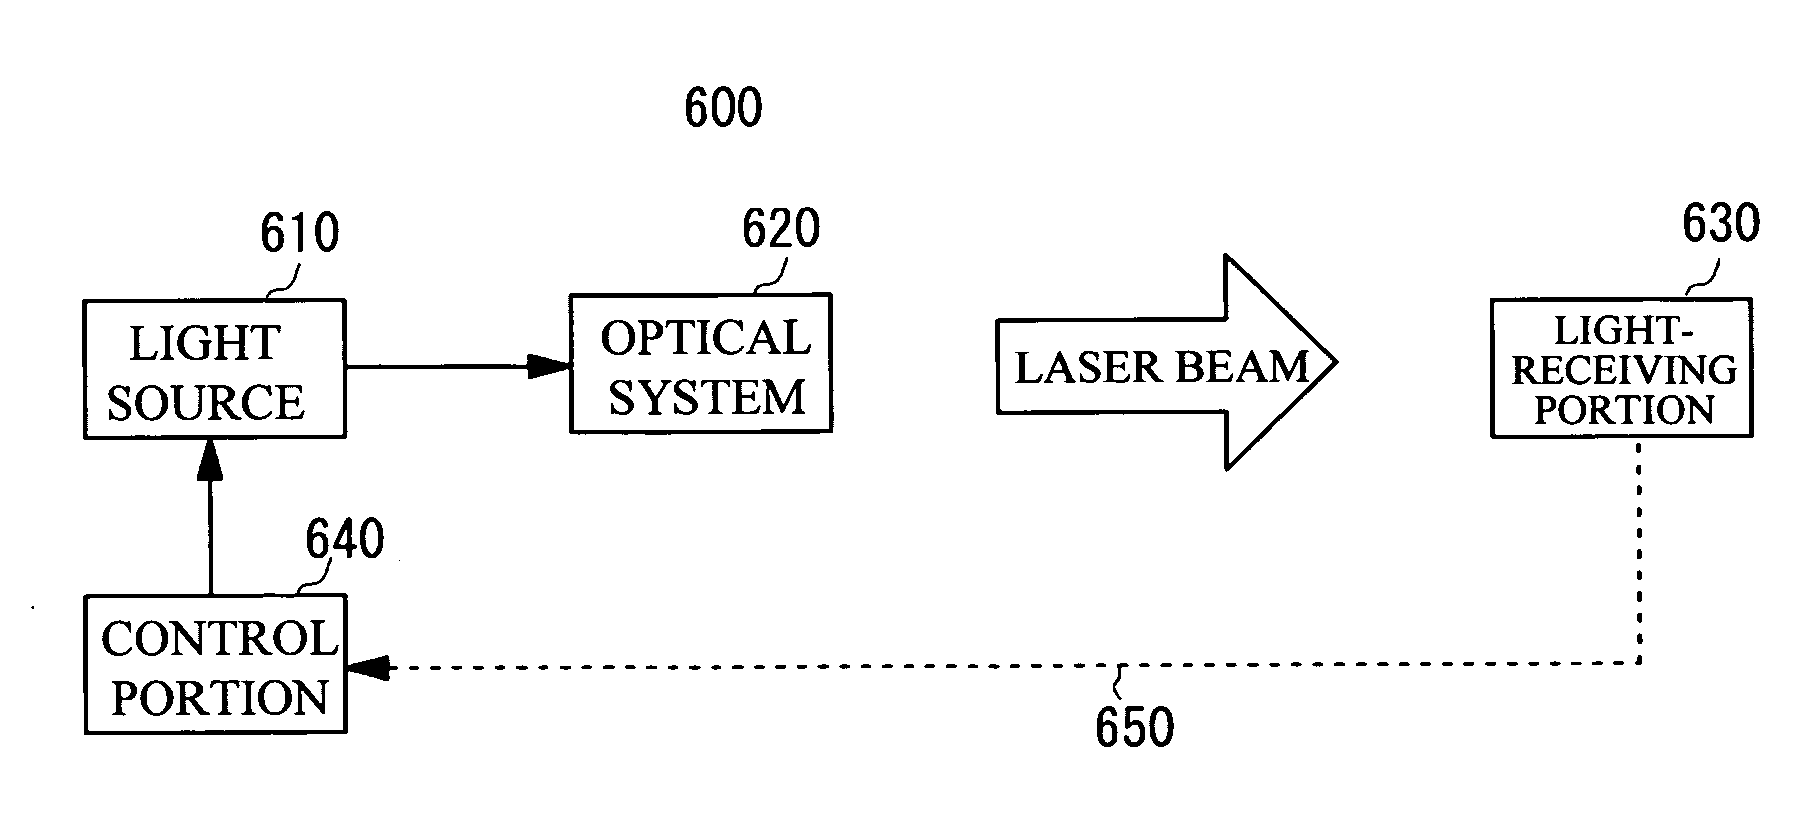 Light-emitting module